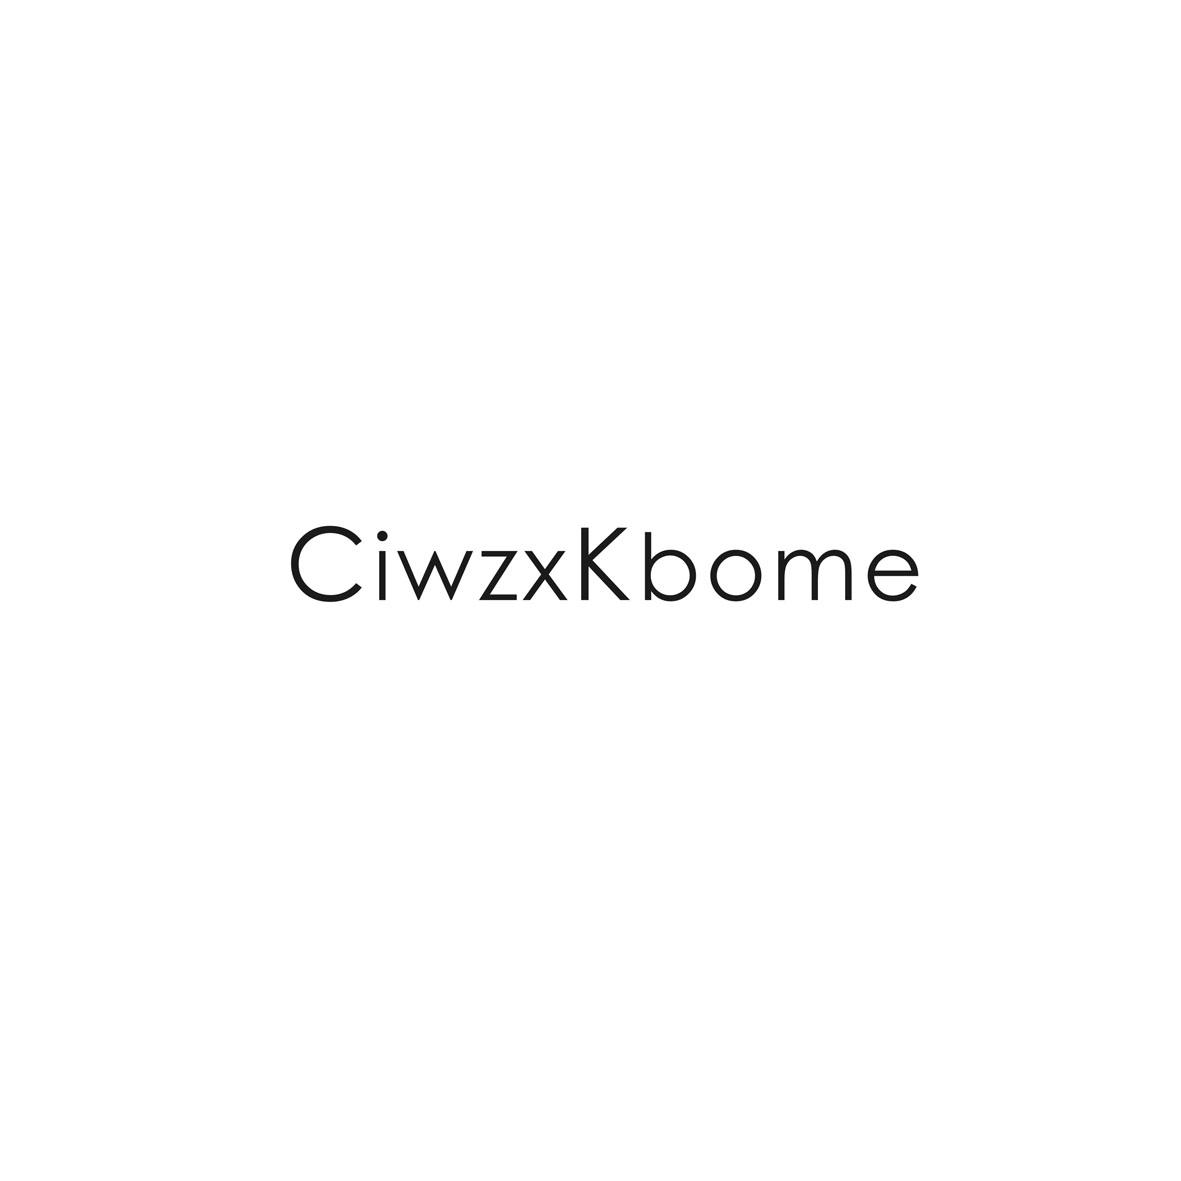 Ciwzx Kbome